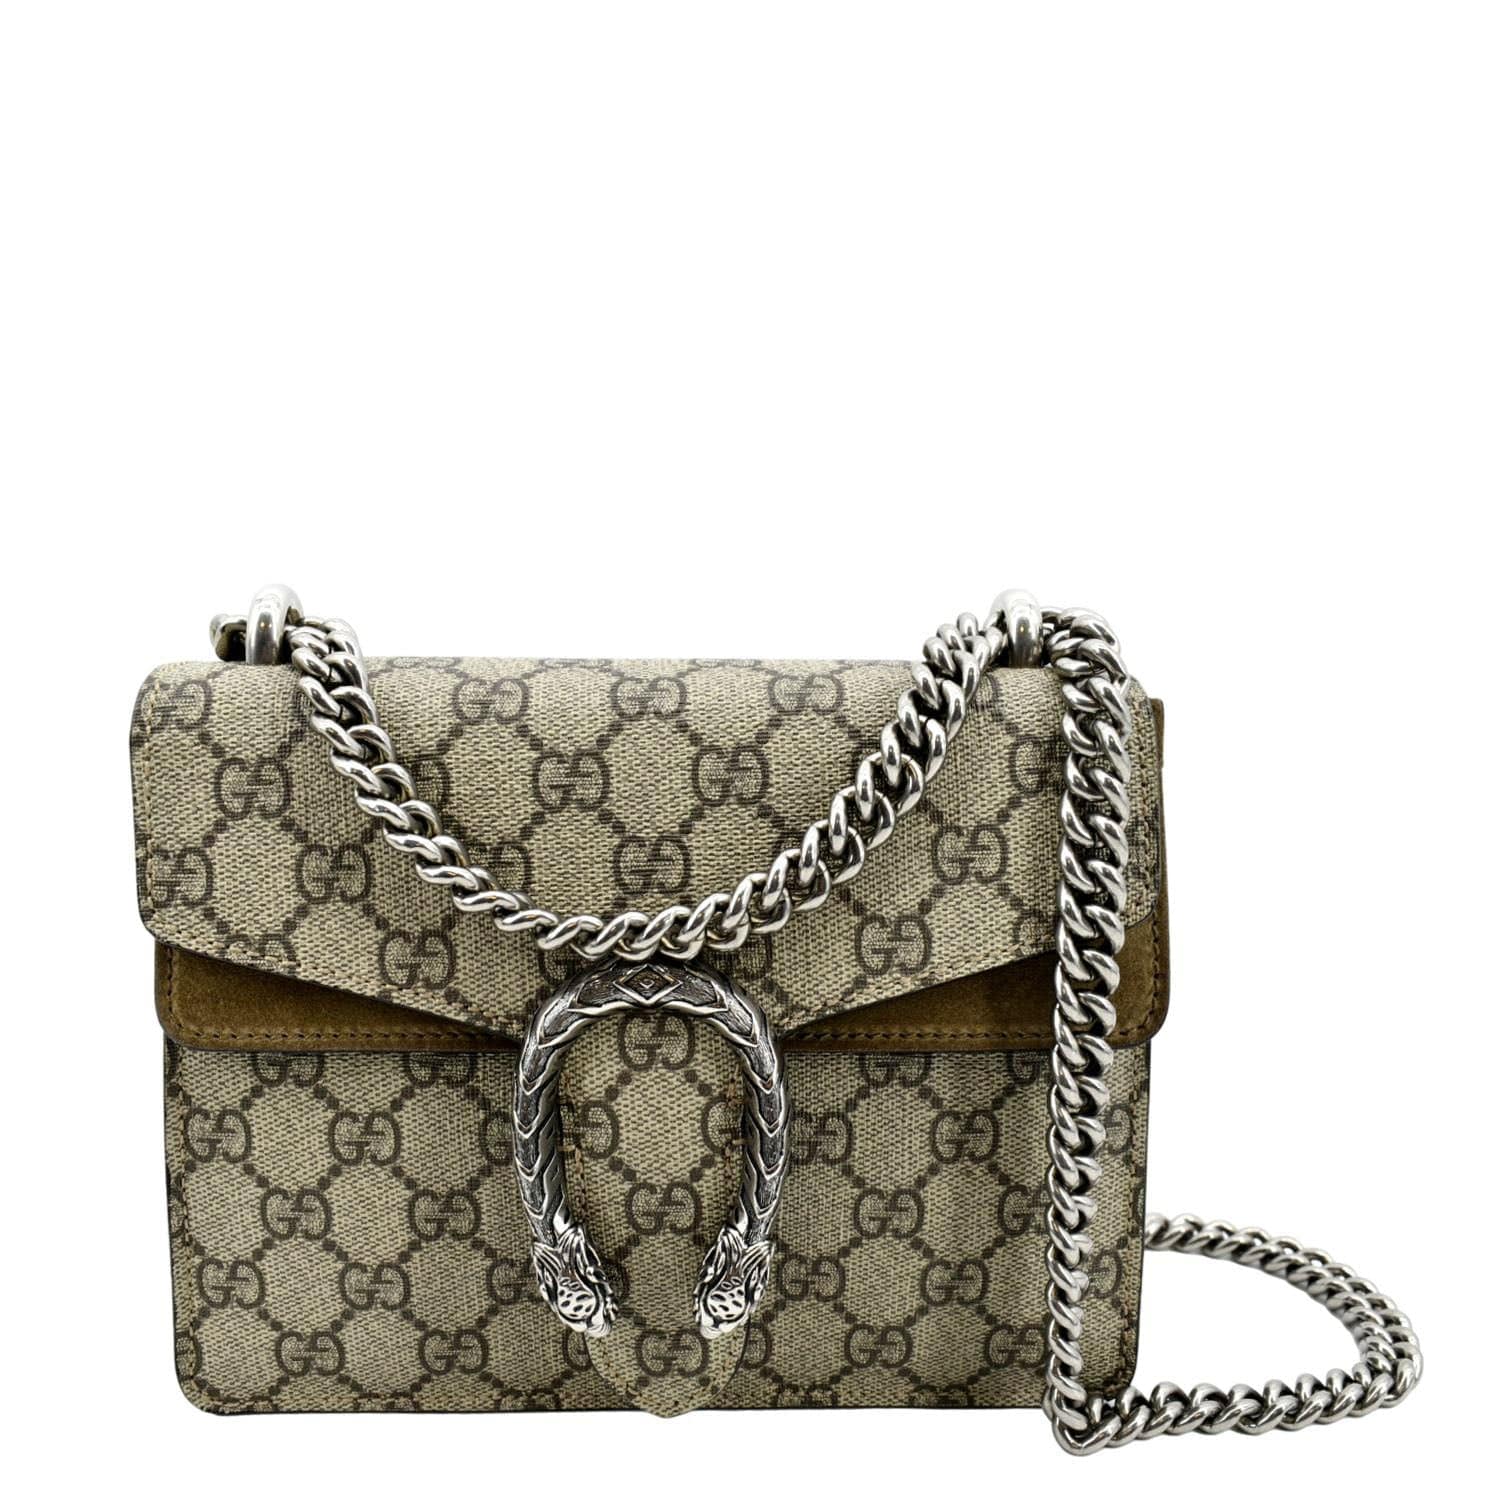 Gucci Dionysus Small GG Bag Beige/White